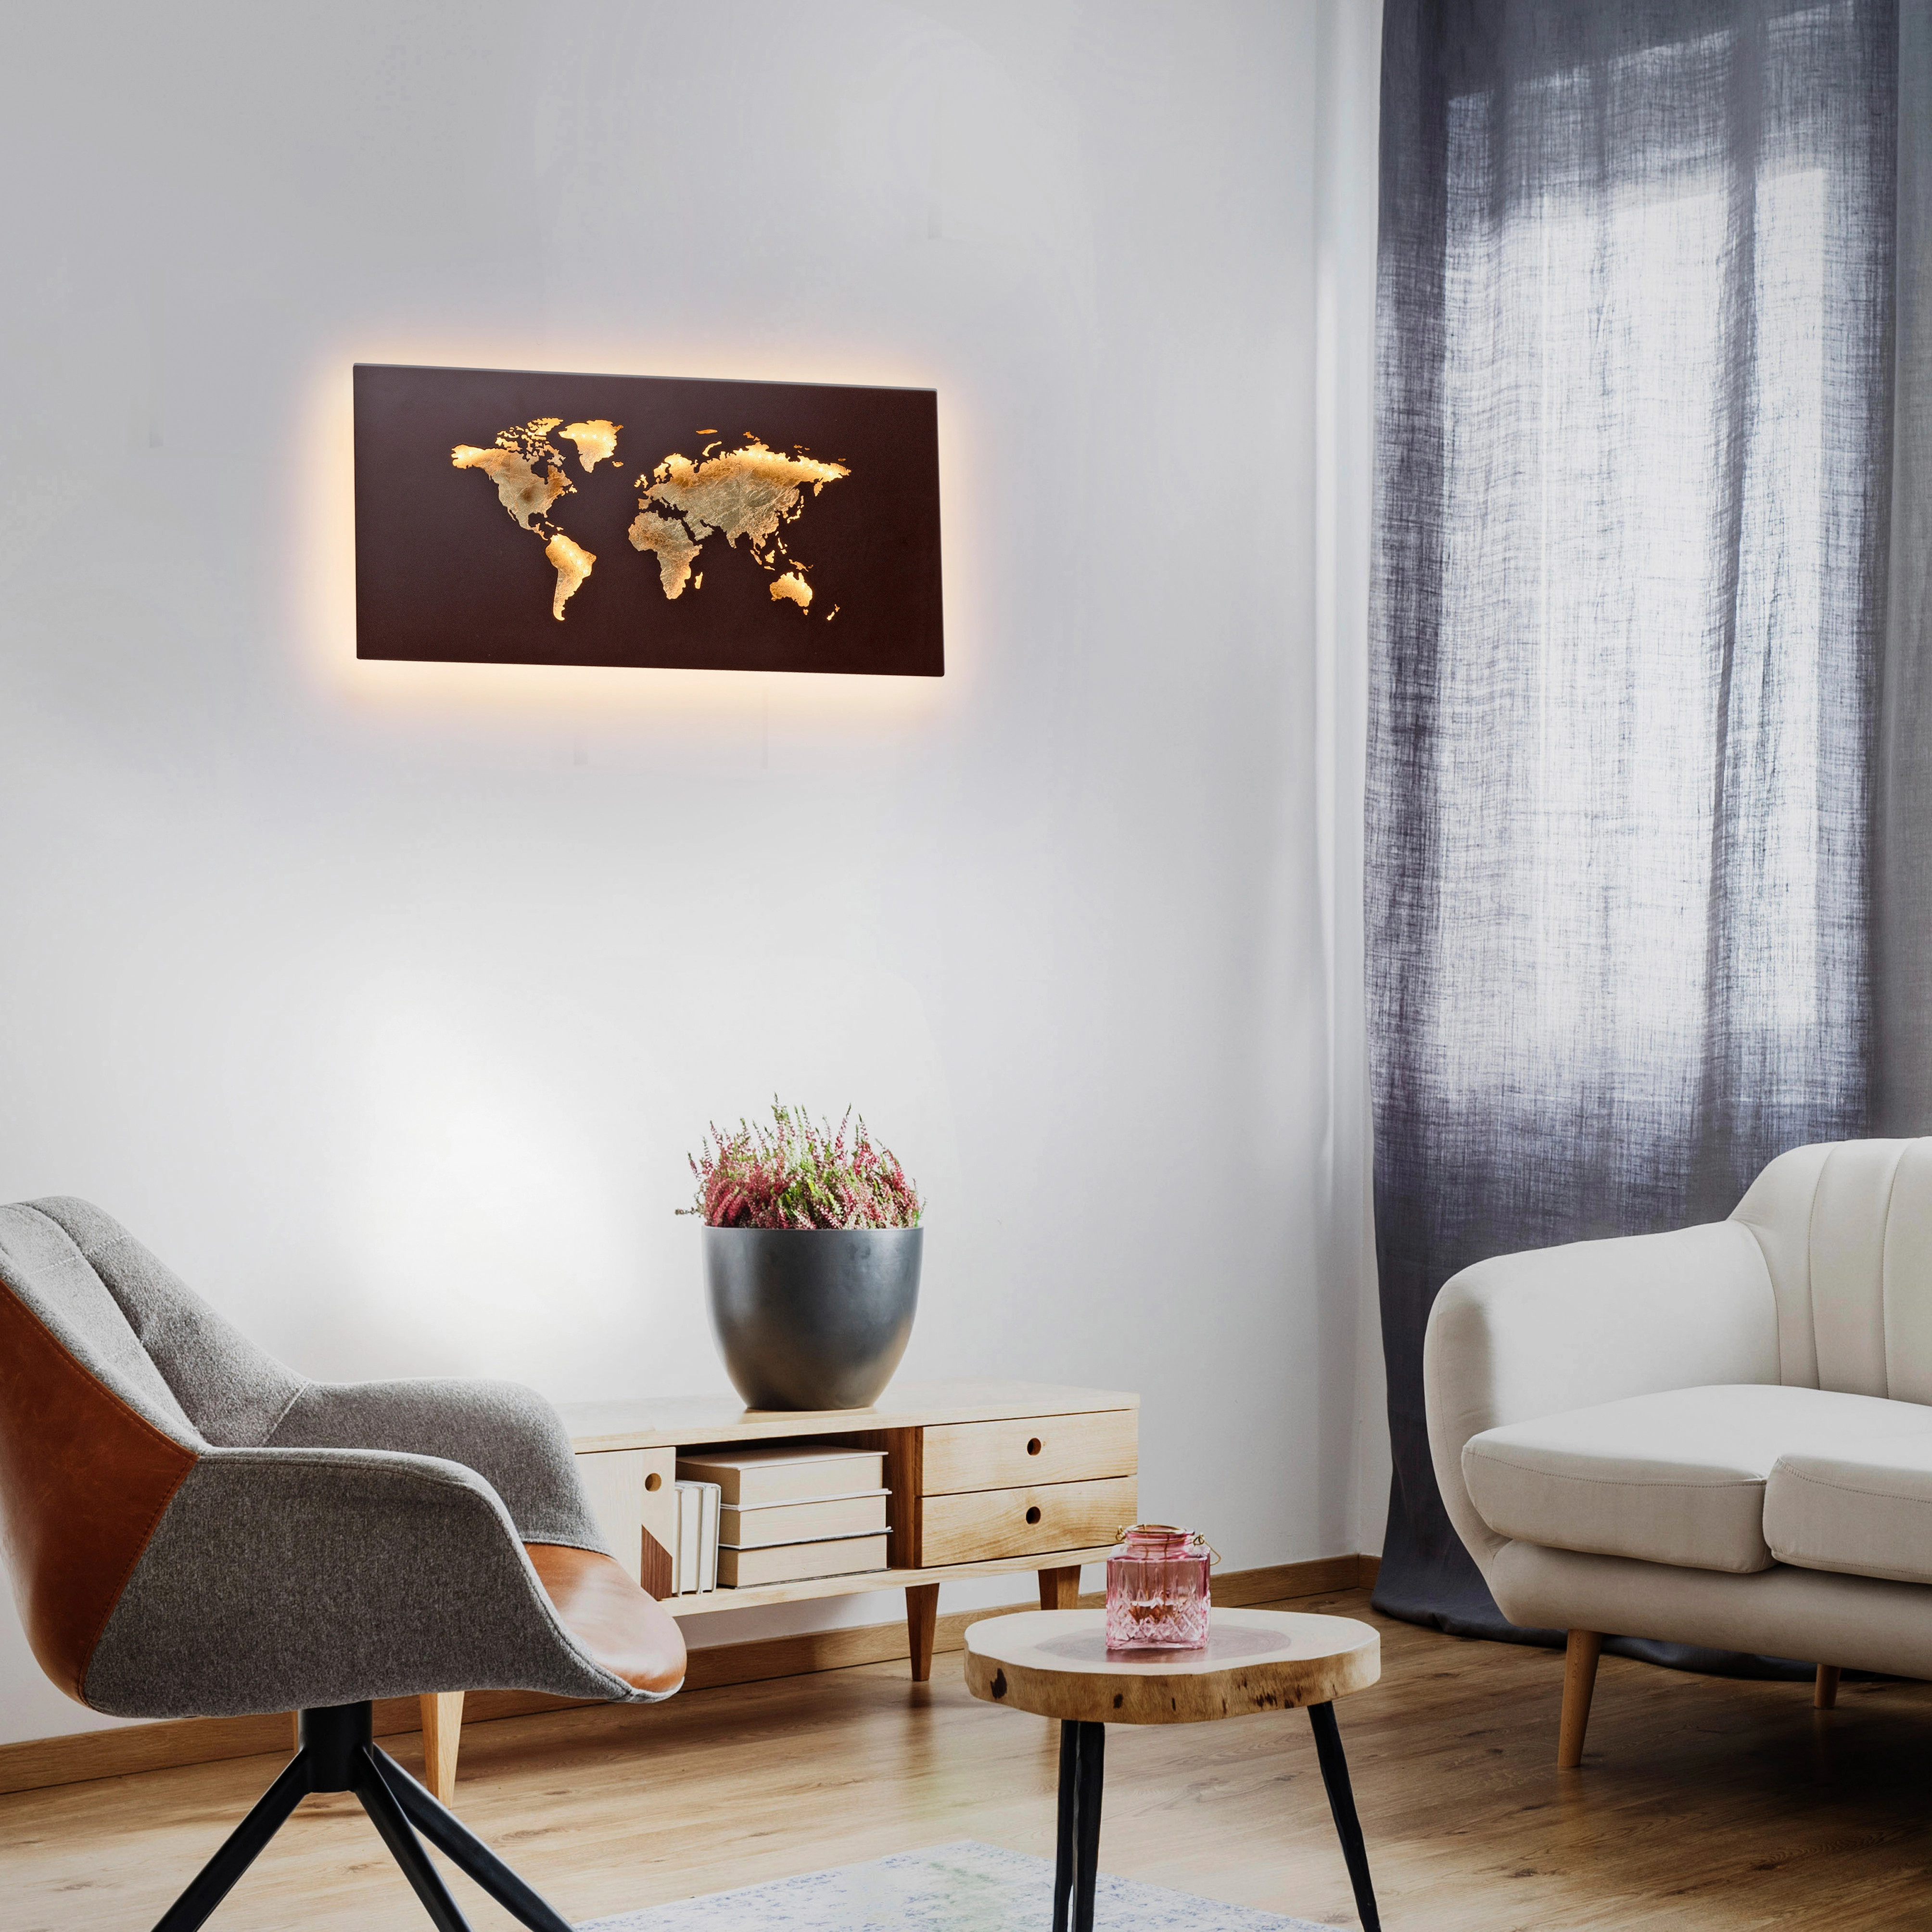 Paul Neuhaus LED-Wandleuchte Map 60 cm x 30 cm Rost kaufen bei OBI